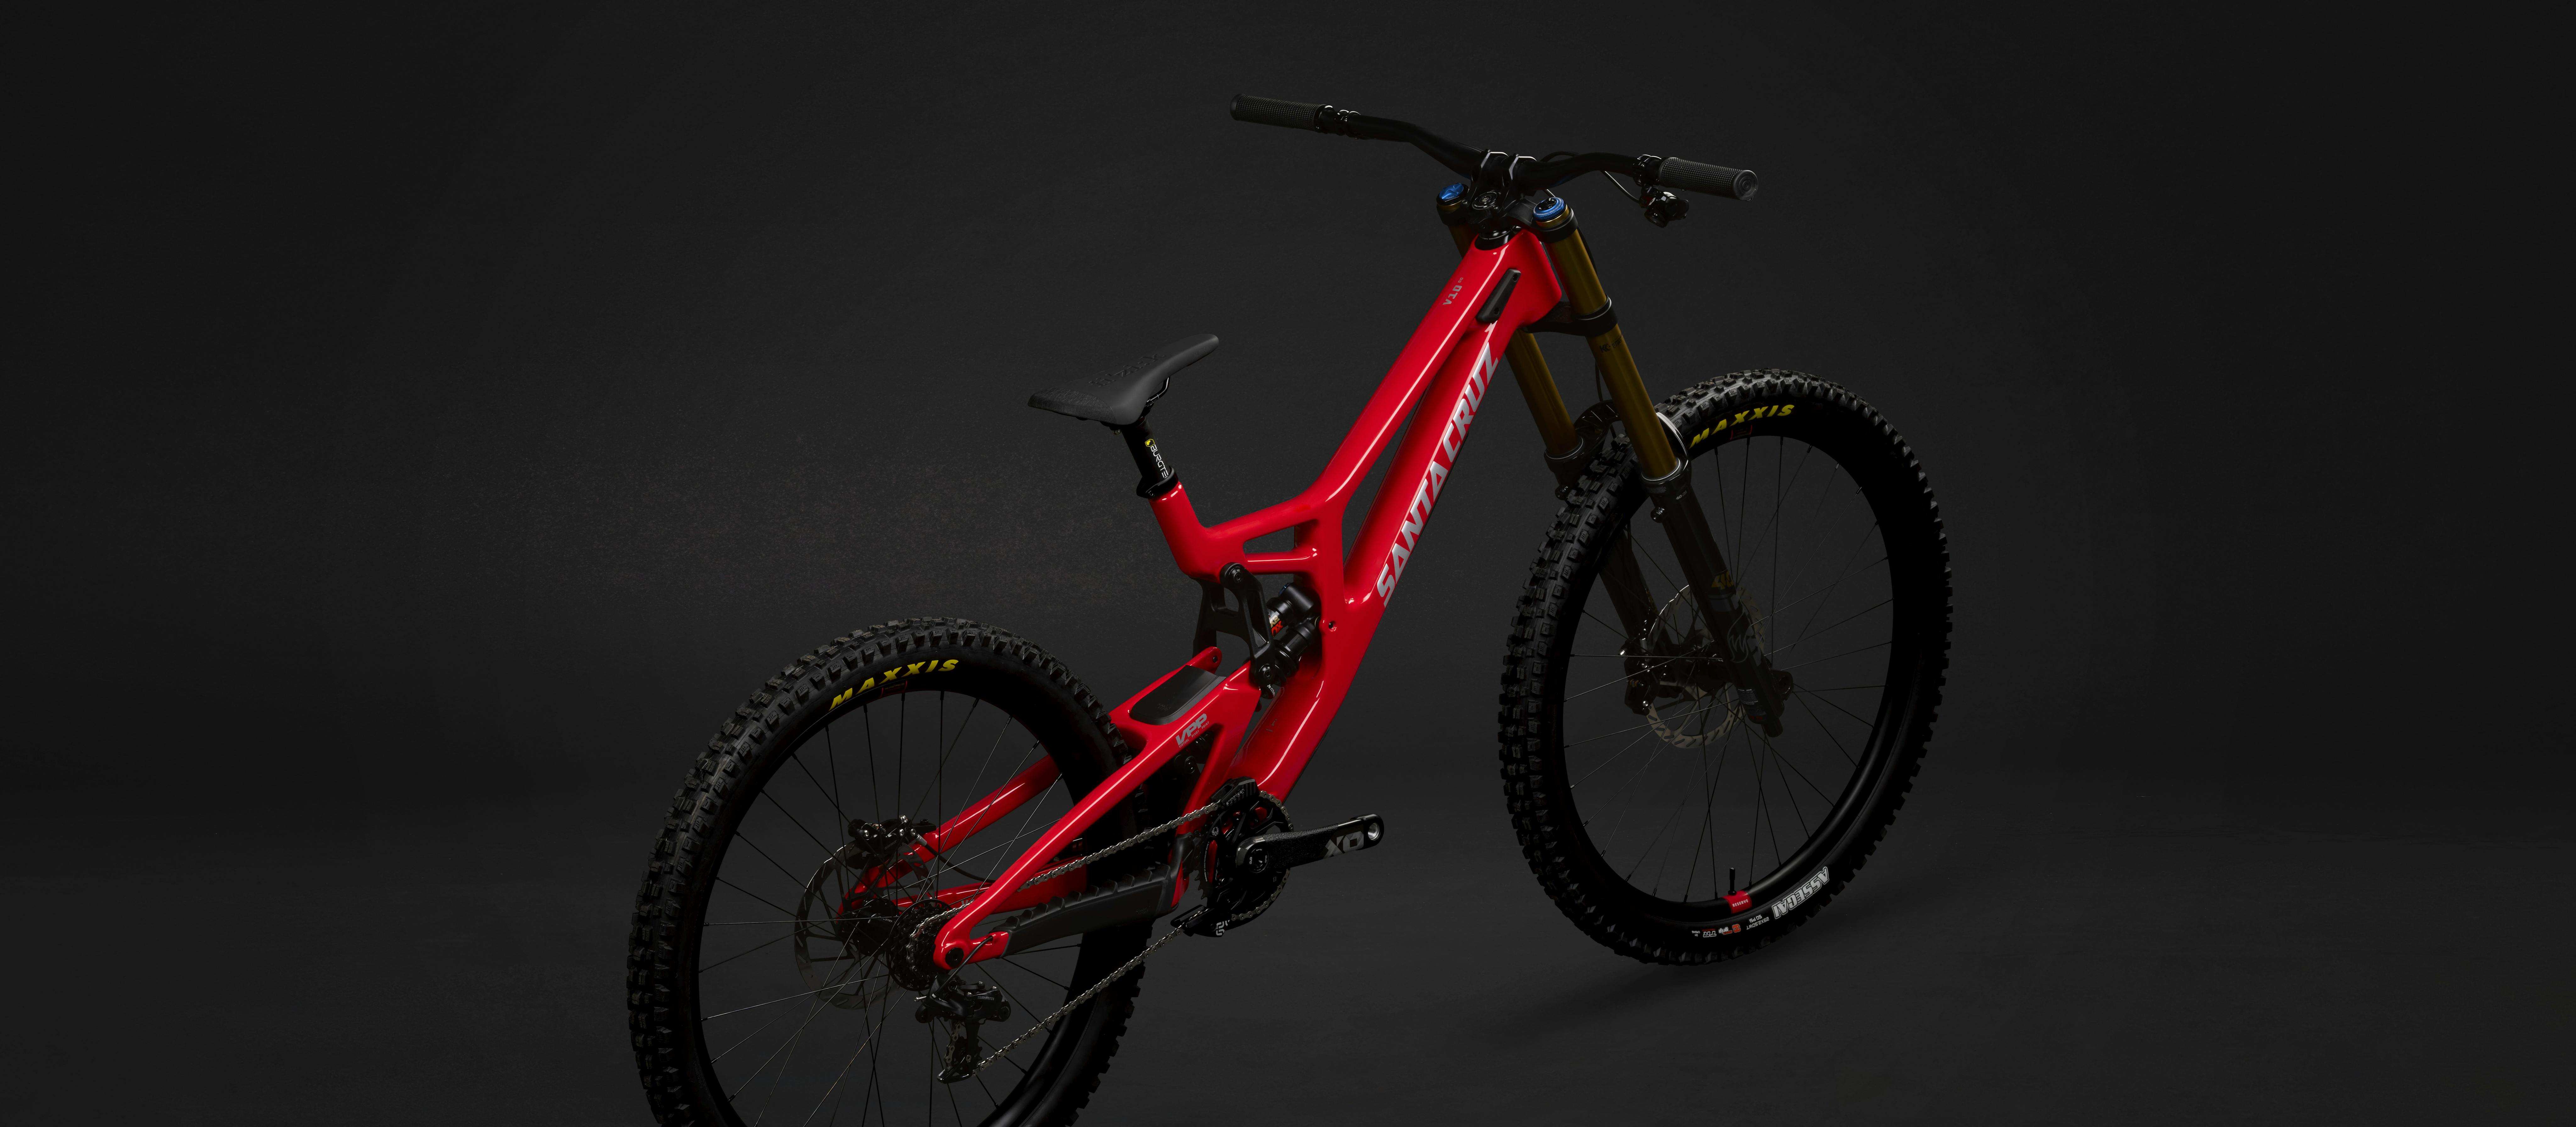 Santa Cruz 5010 Carbon CC X01 Mountain Bike - 2020, Medium